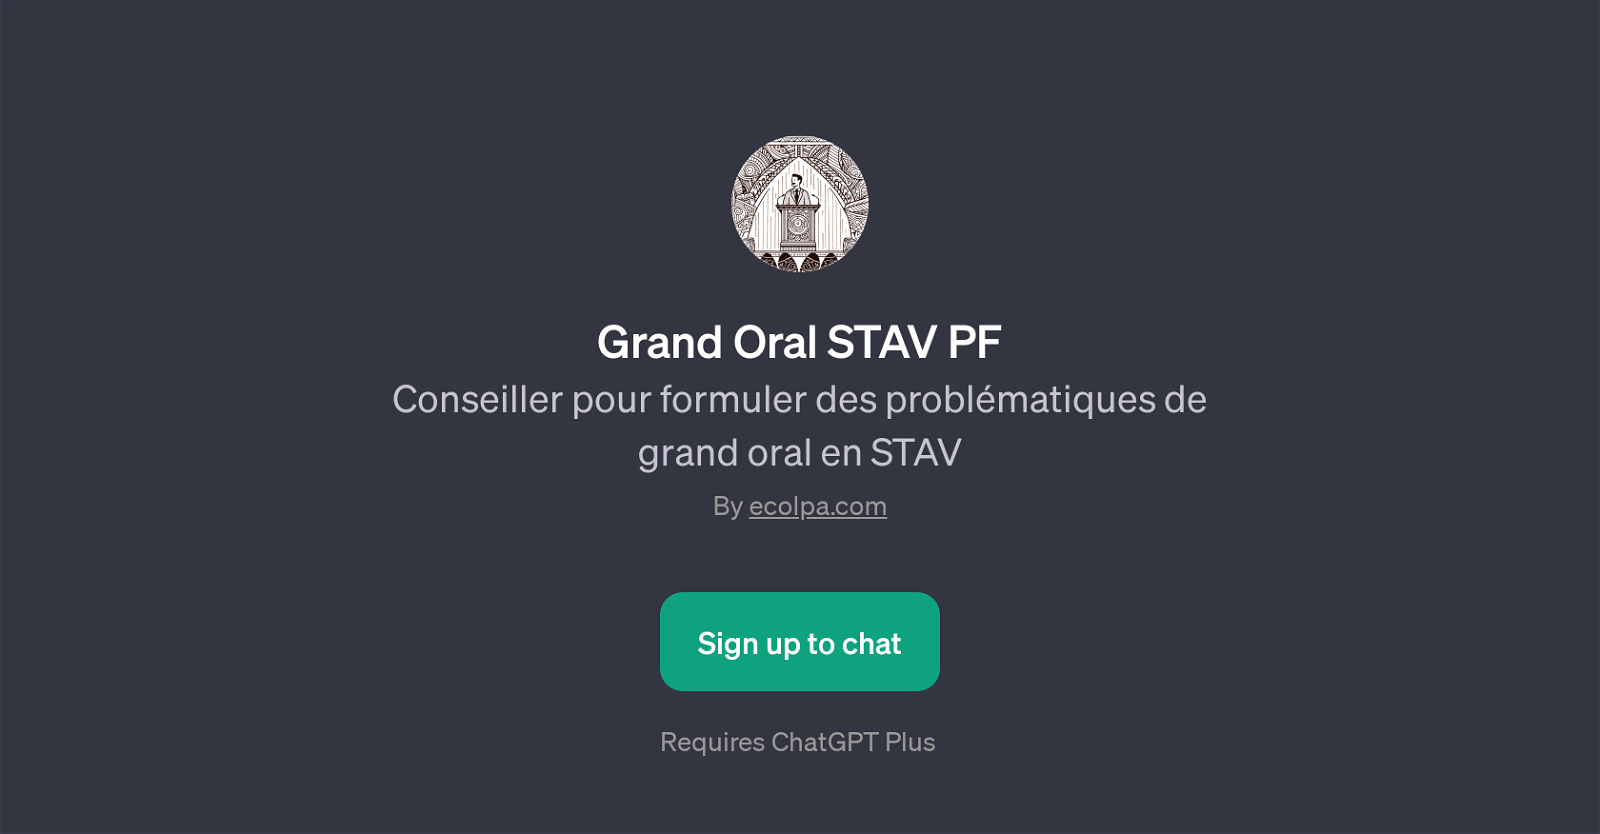 Grand Oral STAV PF website